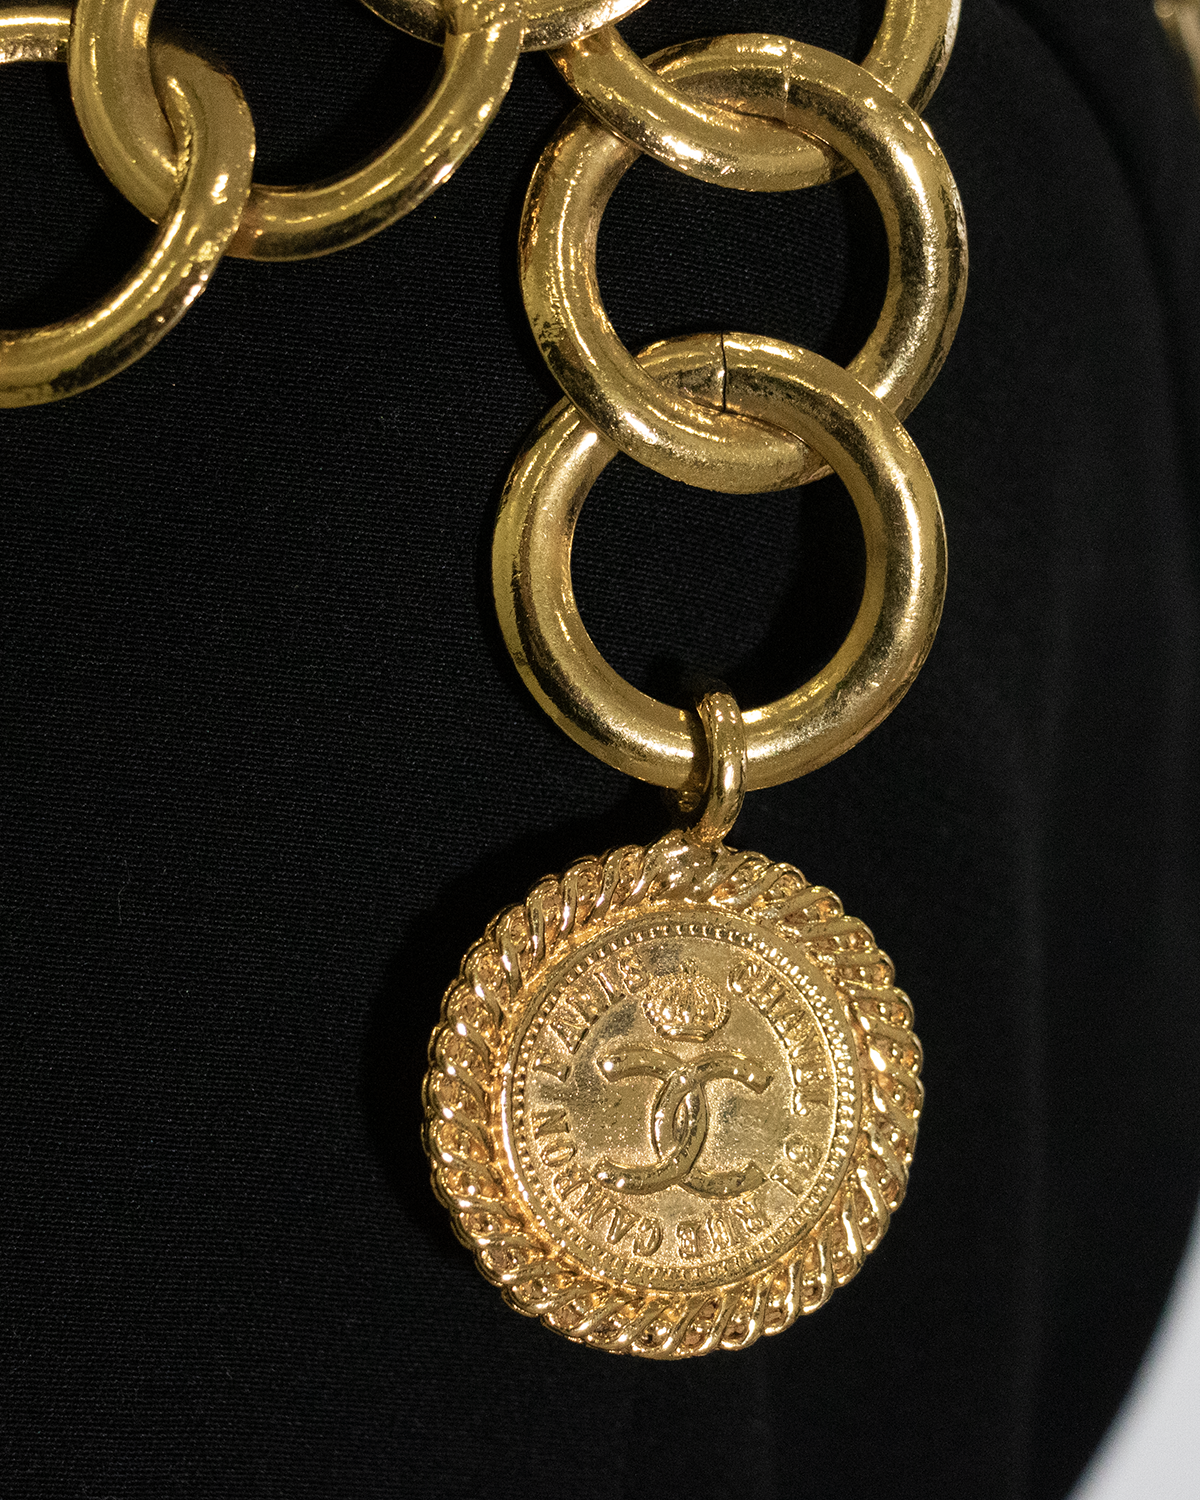 Chanel black dress with golden details 1980s